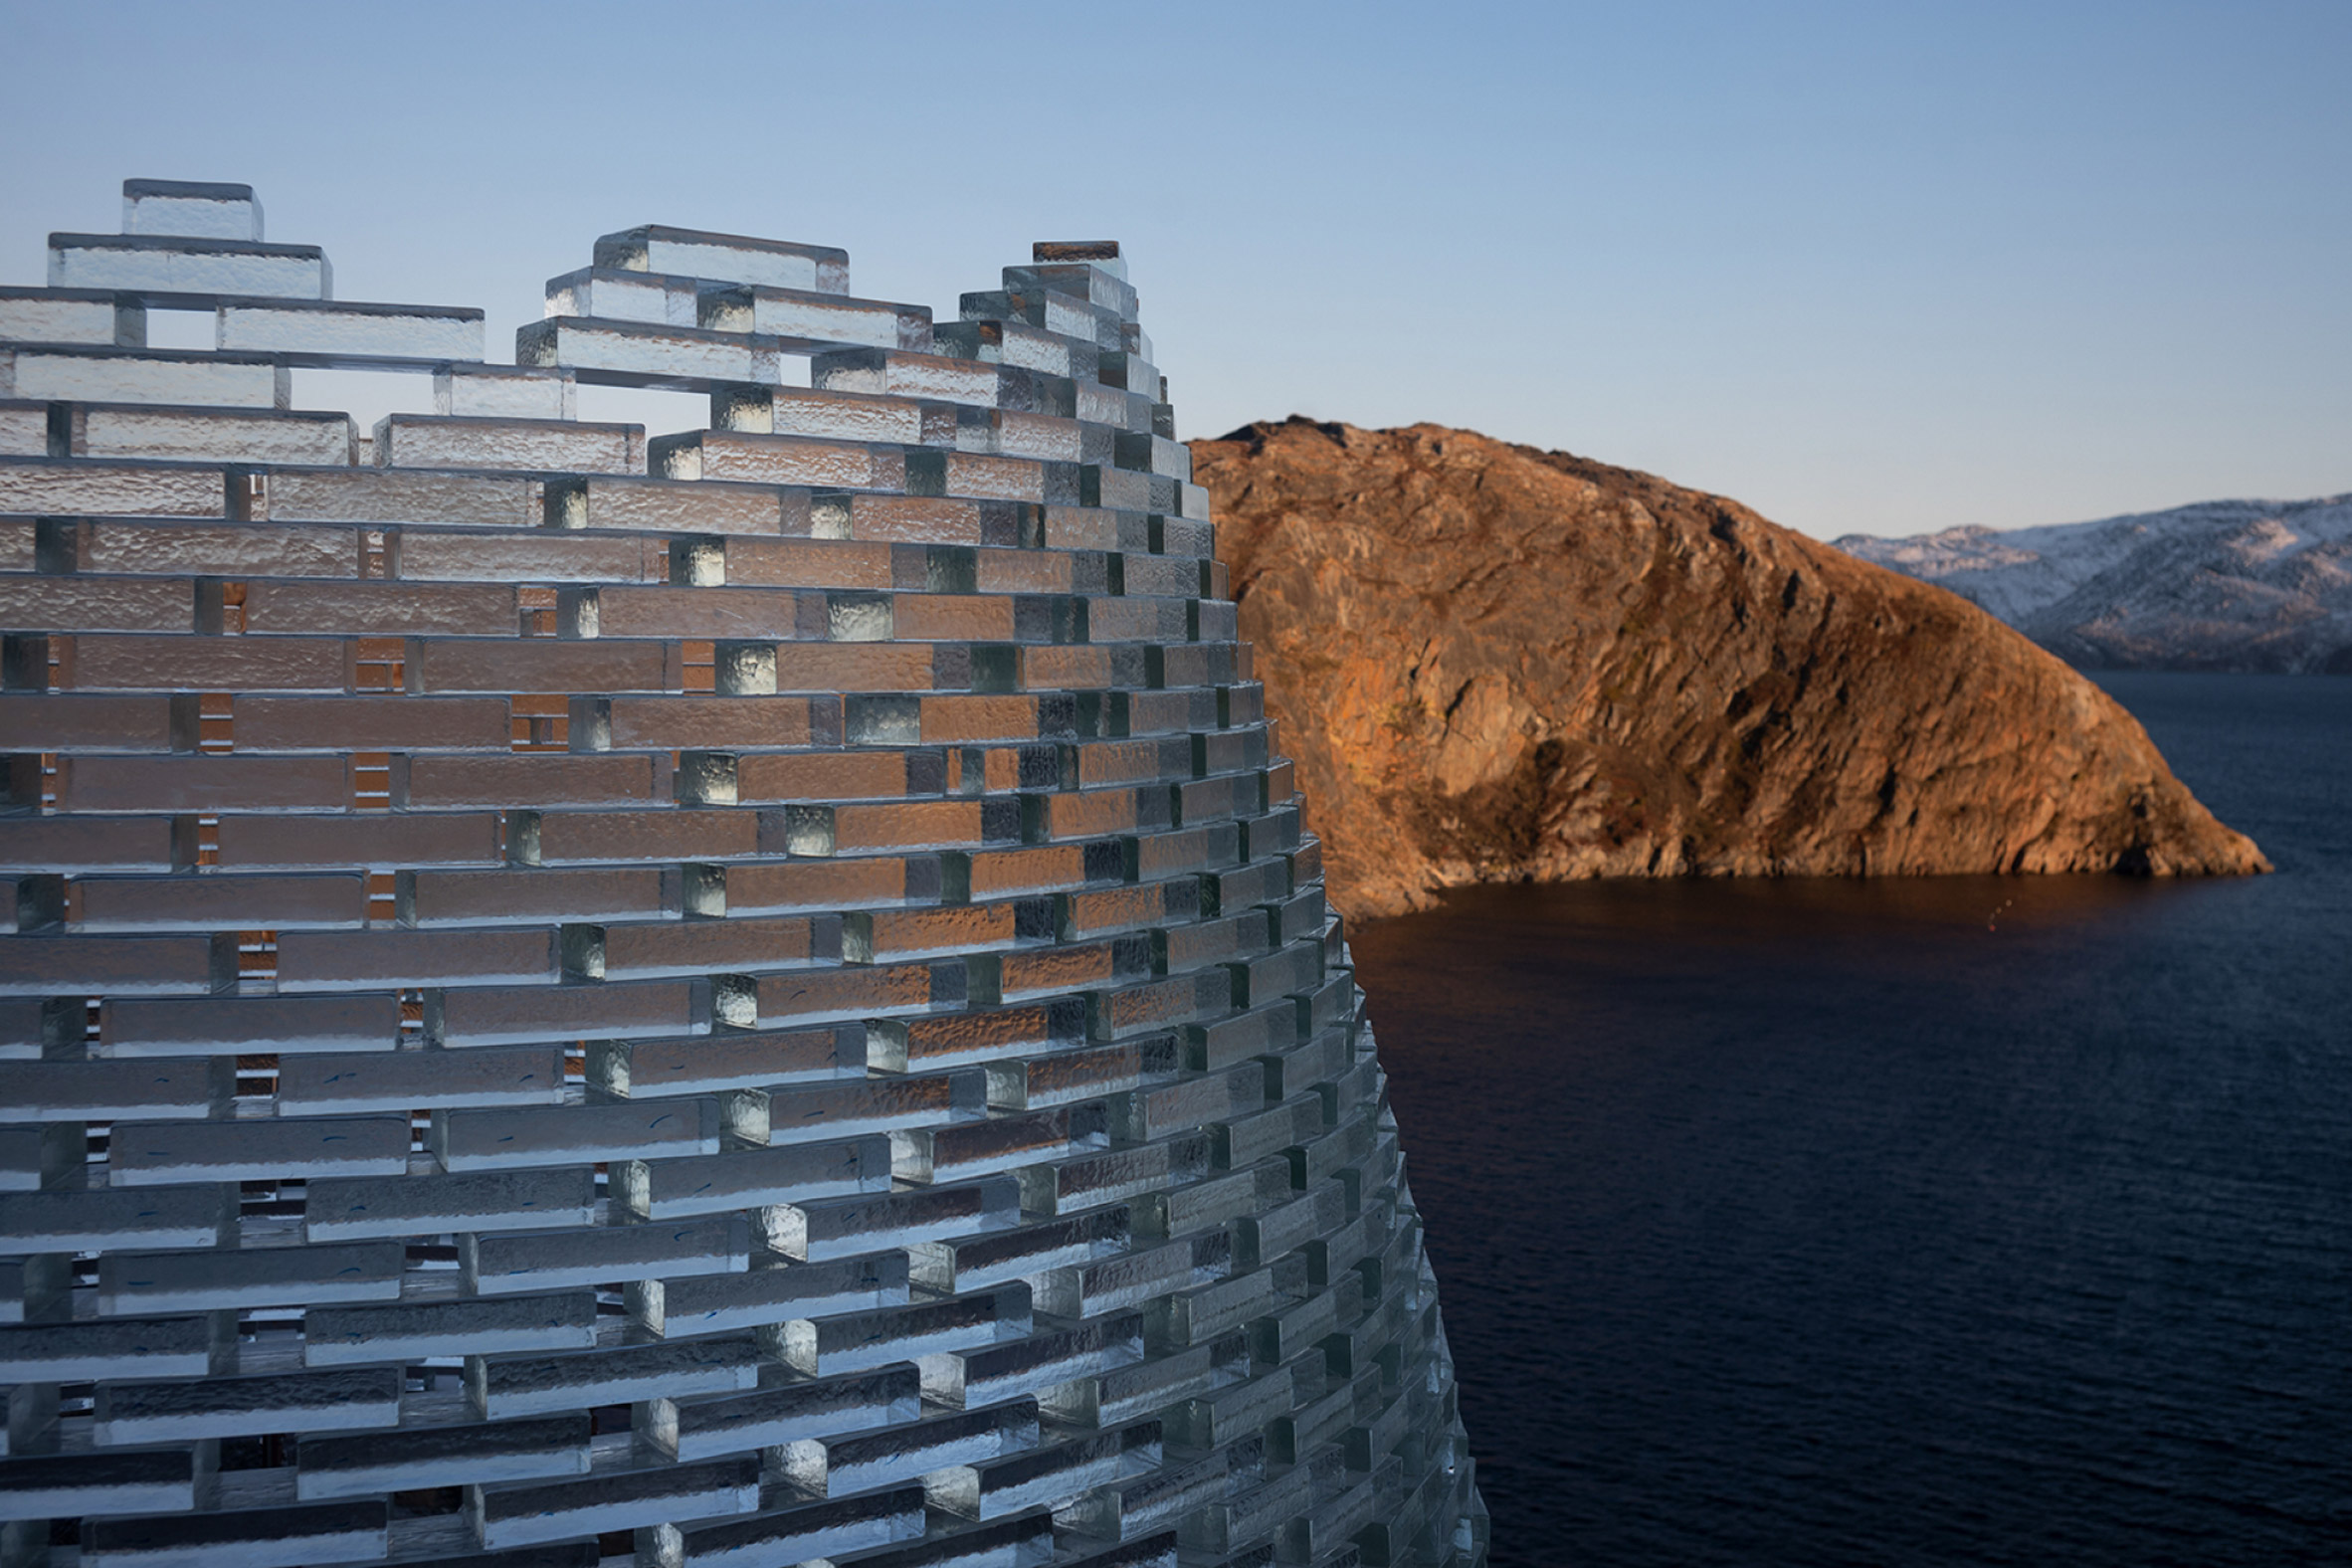 Glass wall pavilion by Konstantin Arkitekter on a rocky hillside overlooking a body of water